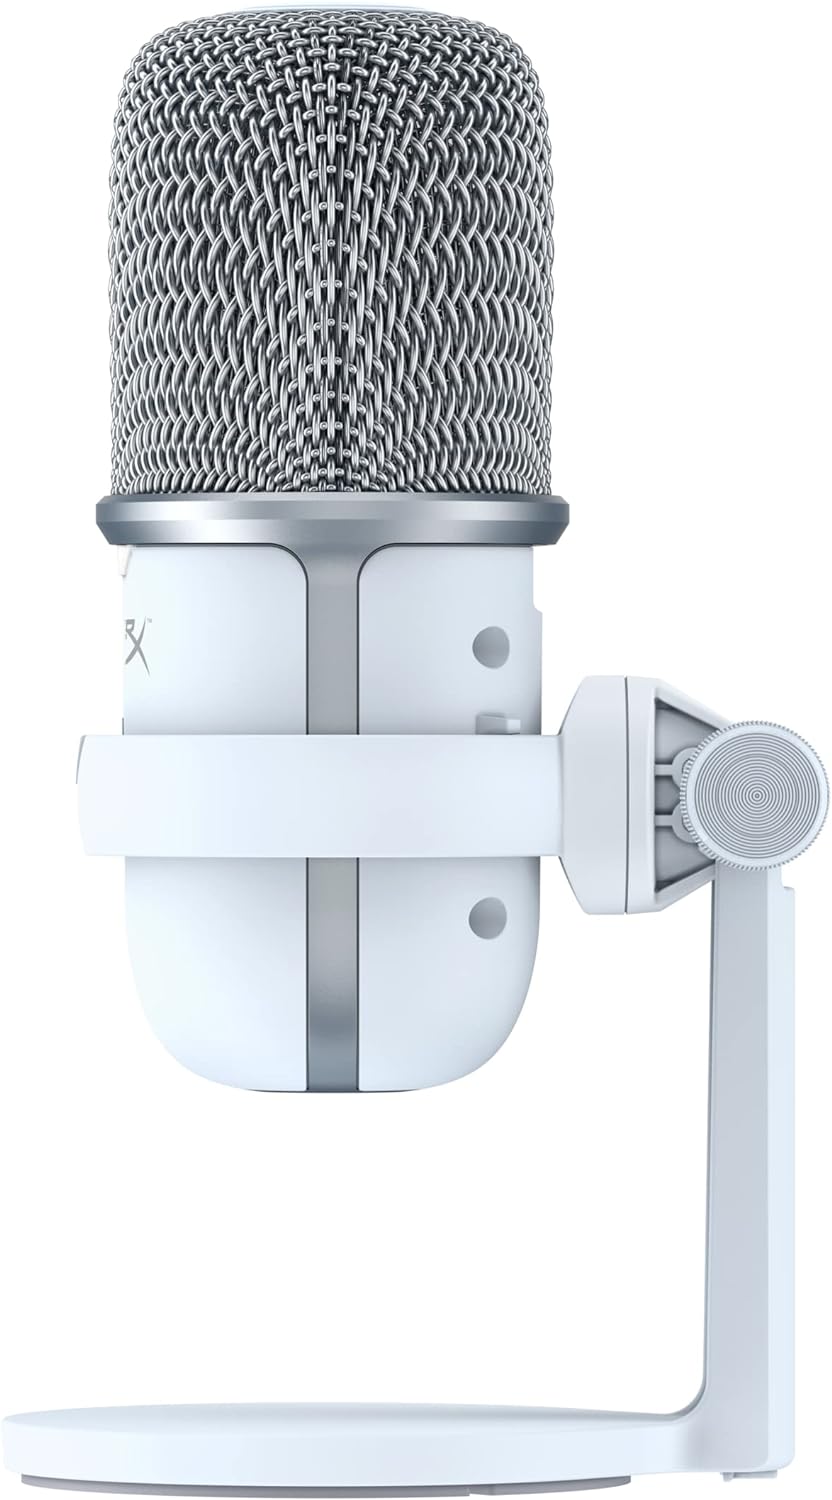 HyperX SoloCast - USB Microphone, White